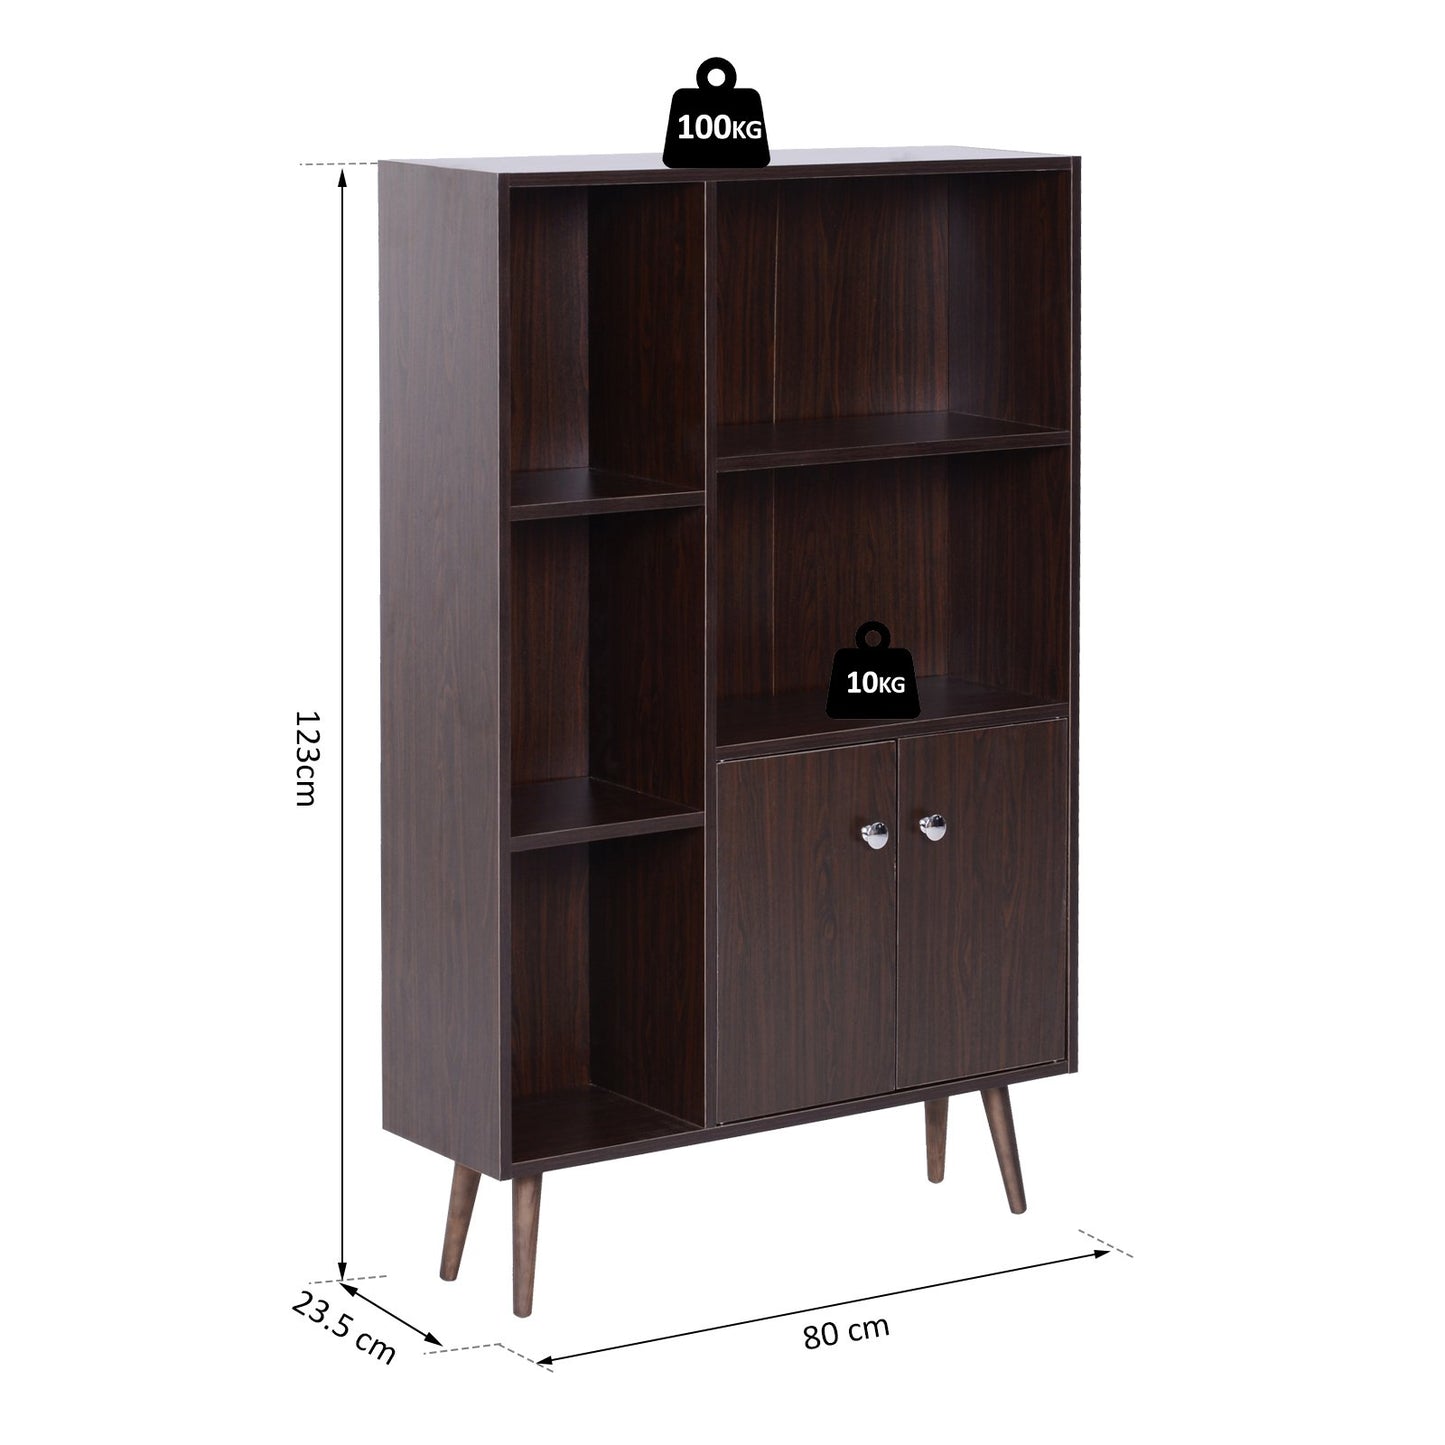 HOMCOM Open Bookcase Cabinet Shelves W/ Two Doors, 80W x 23.5D x 118Hcm-Walnut